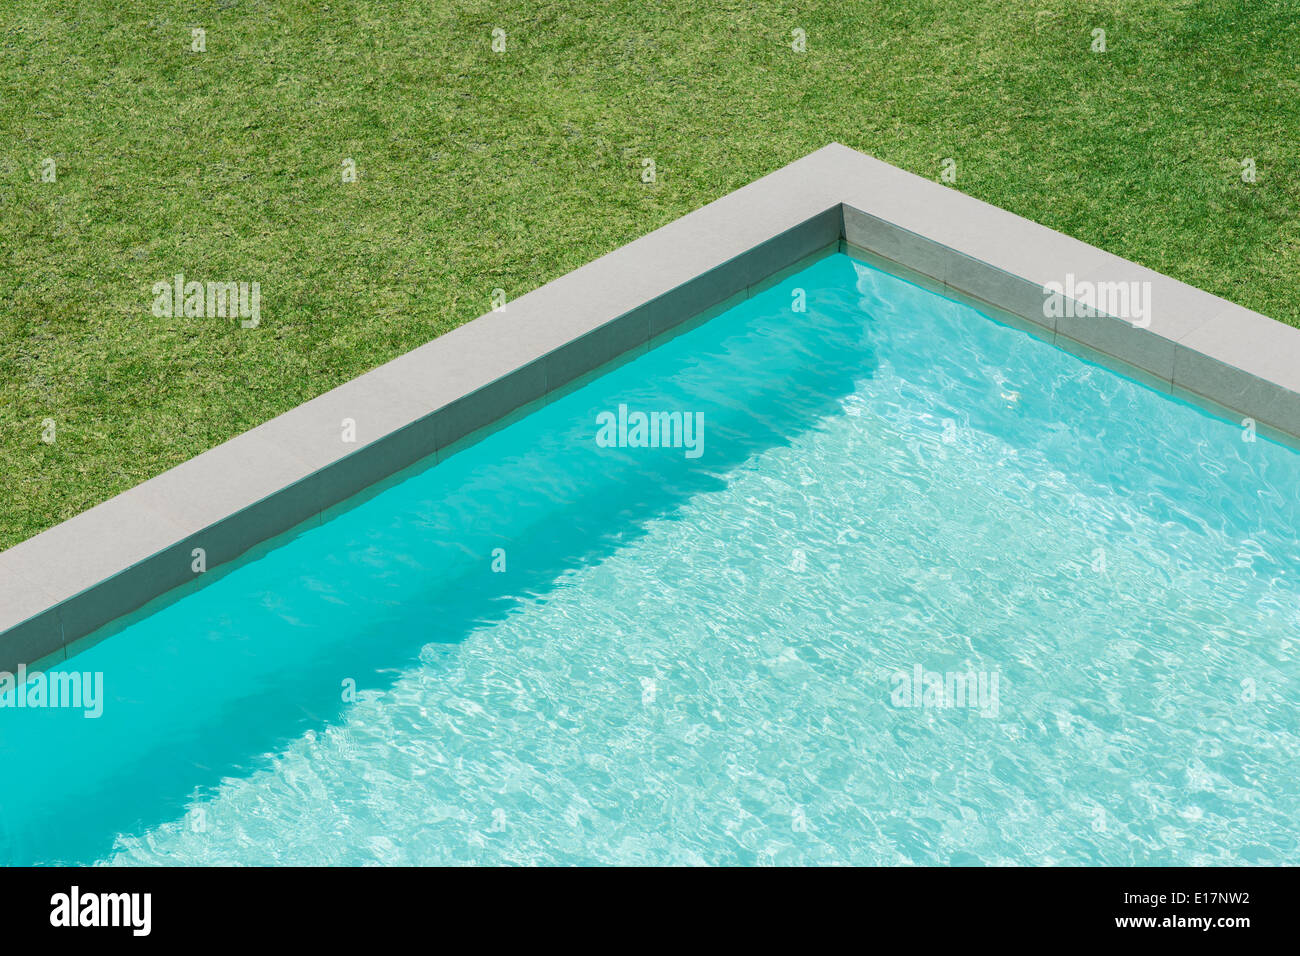 Sunny view of swimming pool in backyard Stock Photo